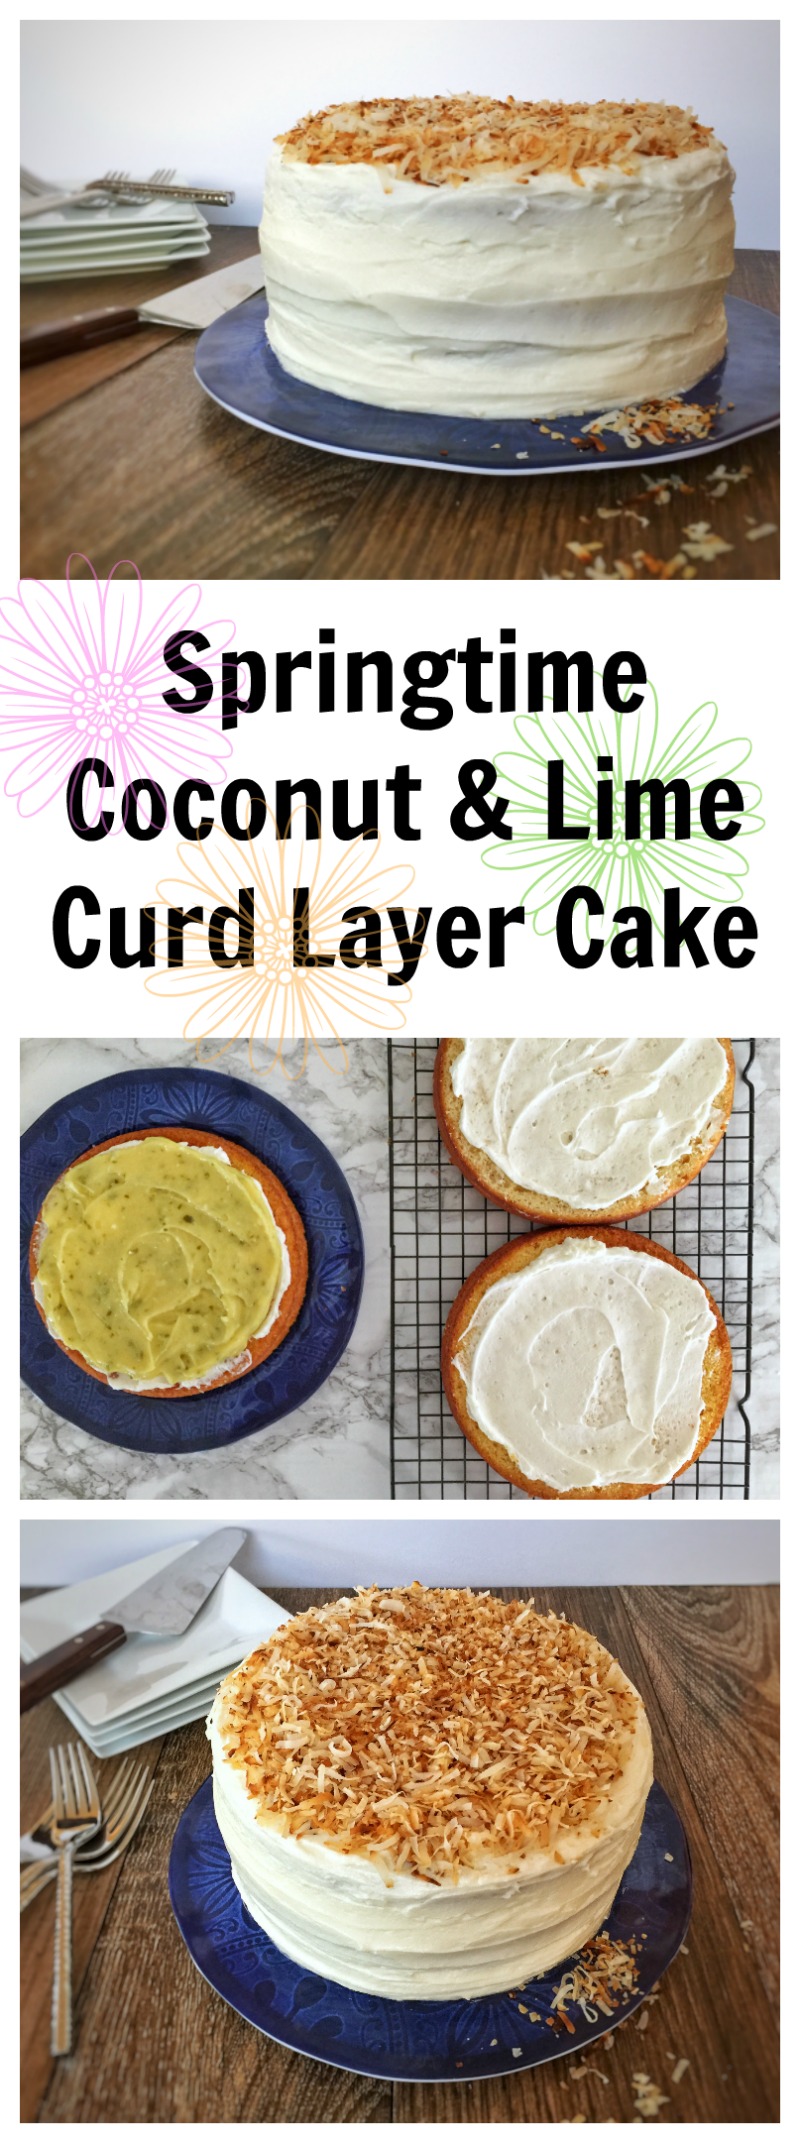 Springtime Coconut & Lime Curd Layer Cake